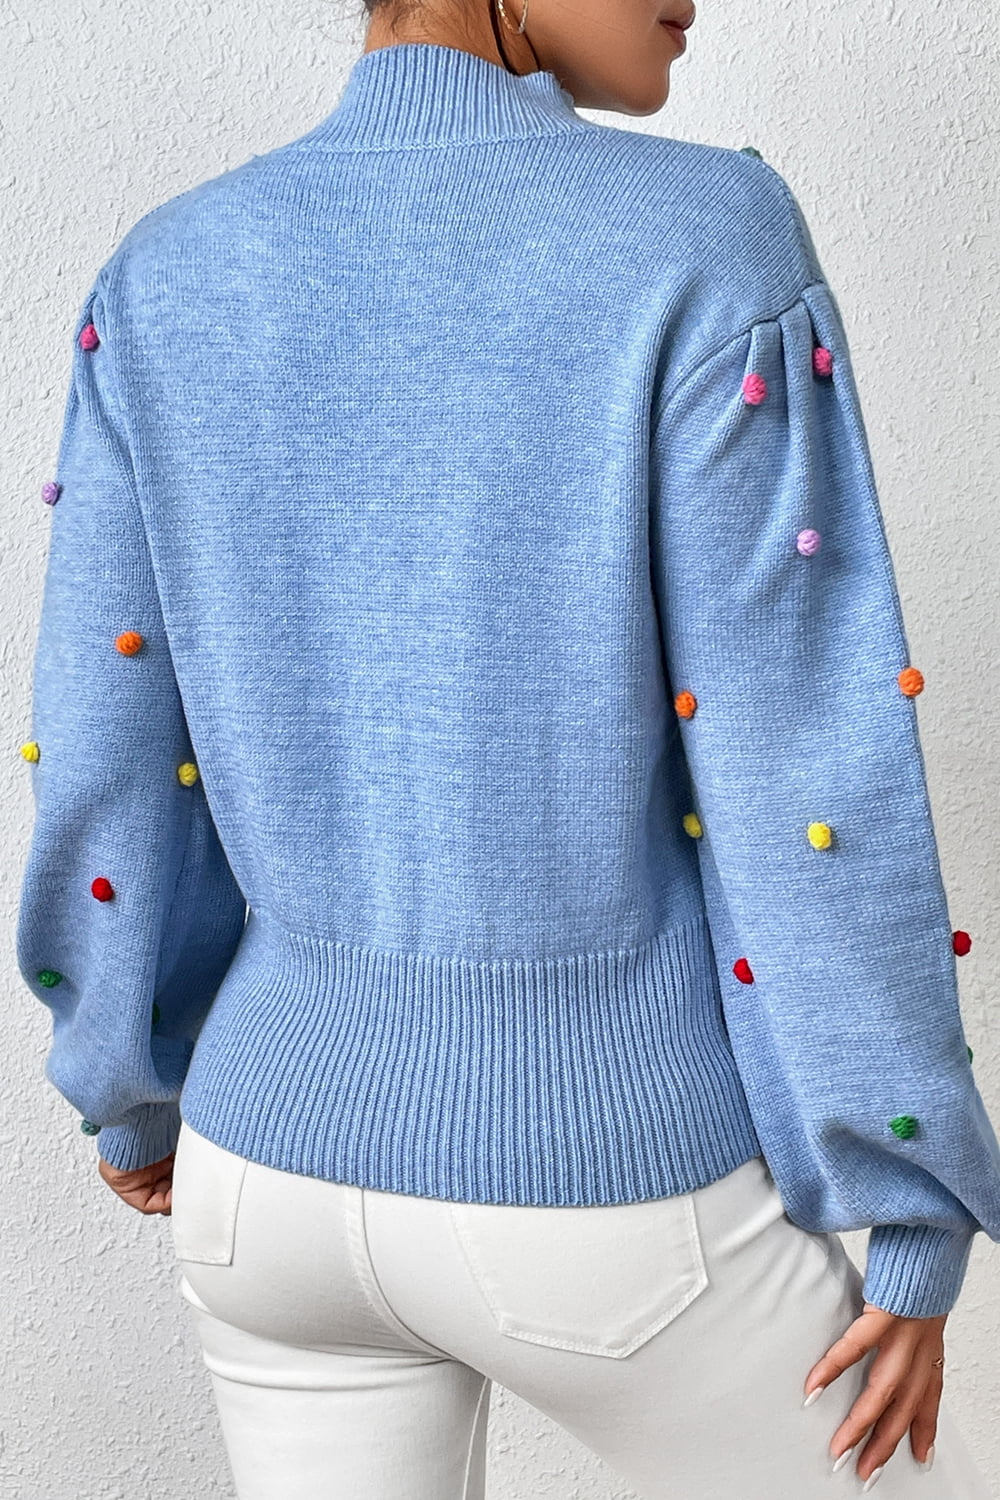 Pom-Pom Trim Mock Neck Long Sleeve Pullover Sweater - bertofonsi